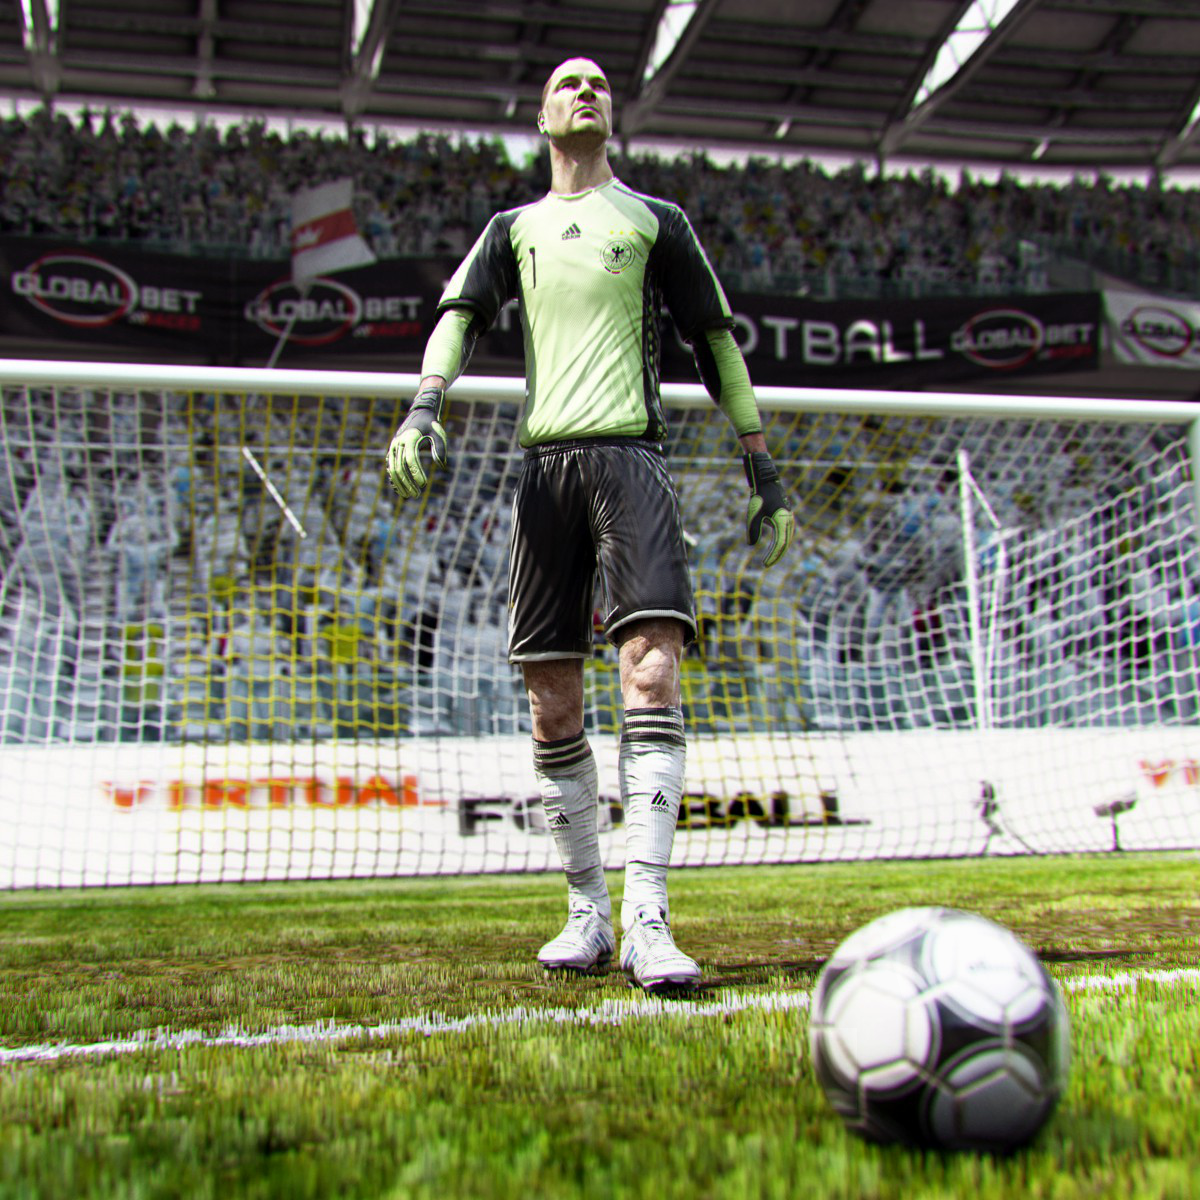 Media Stream Virtual Sports - Football Virtual Football Game by Virtual Sports Games by Global Bet